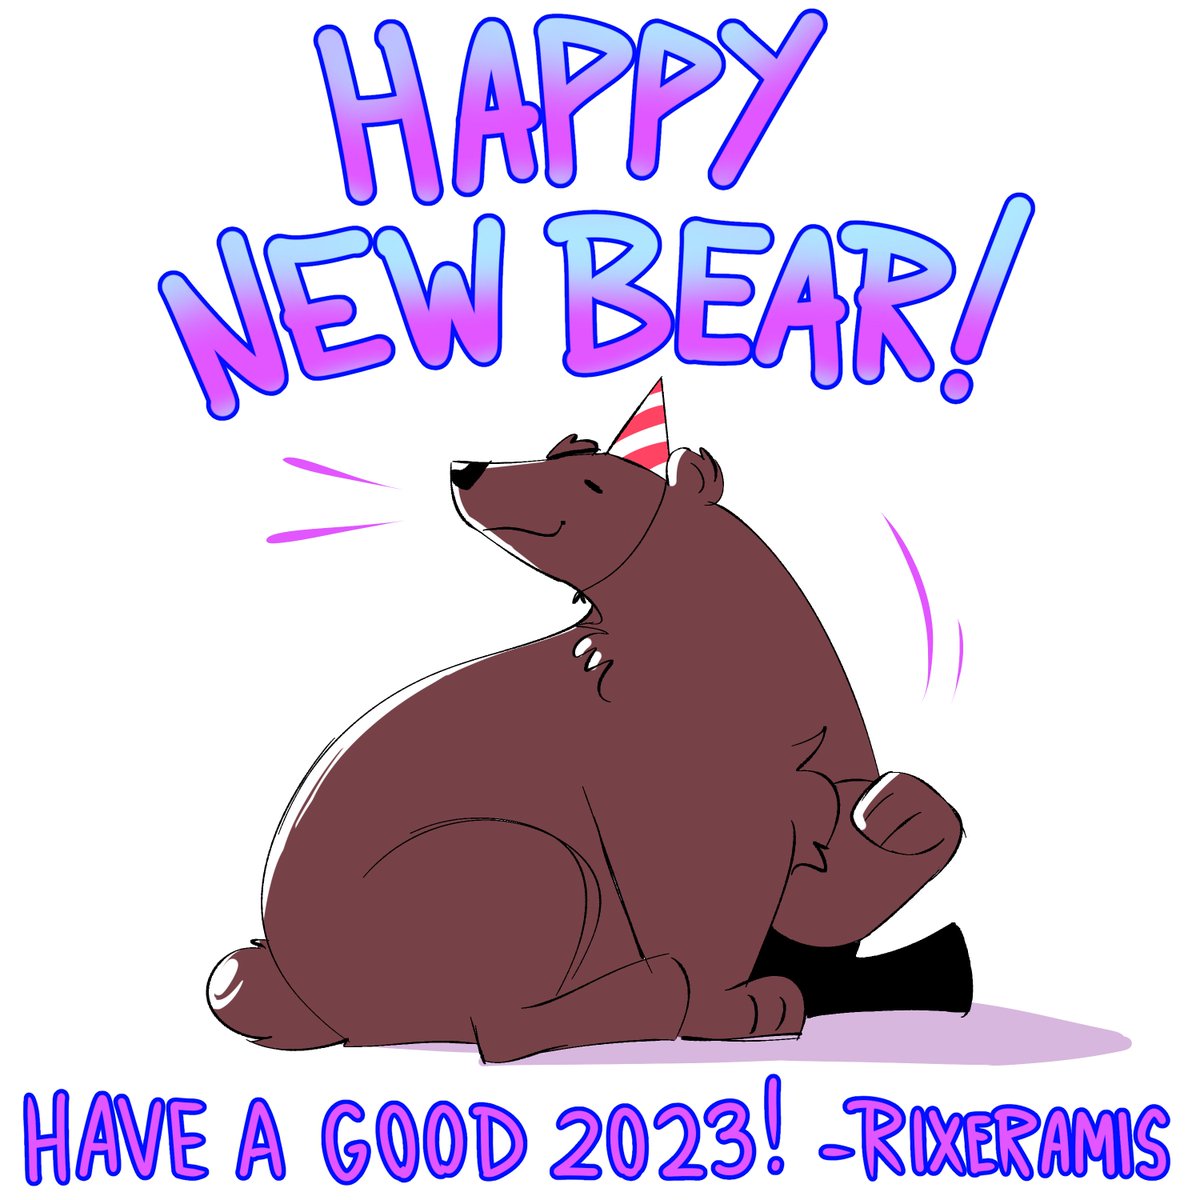 HAPPY NEW BEAR EVERYONE! see you next bear :3 